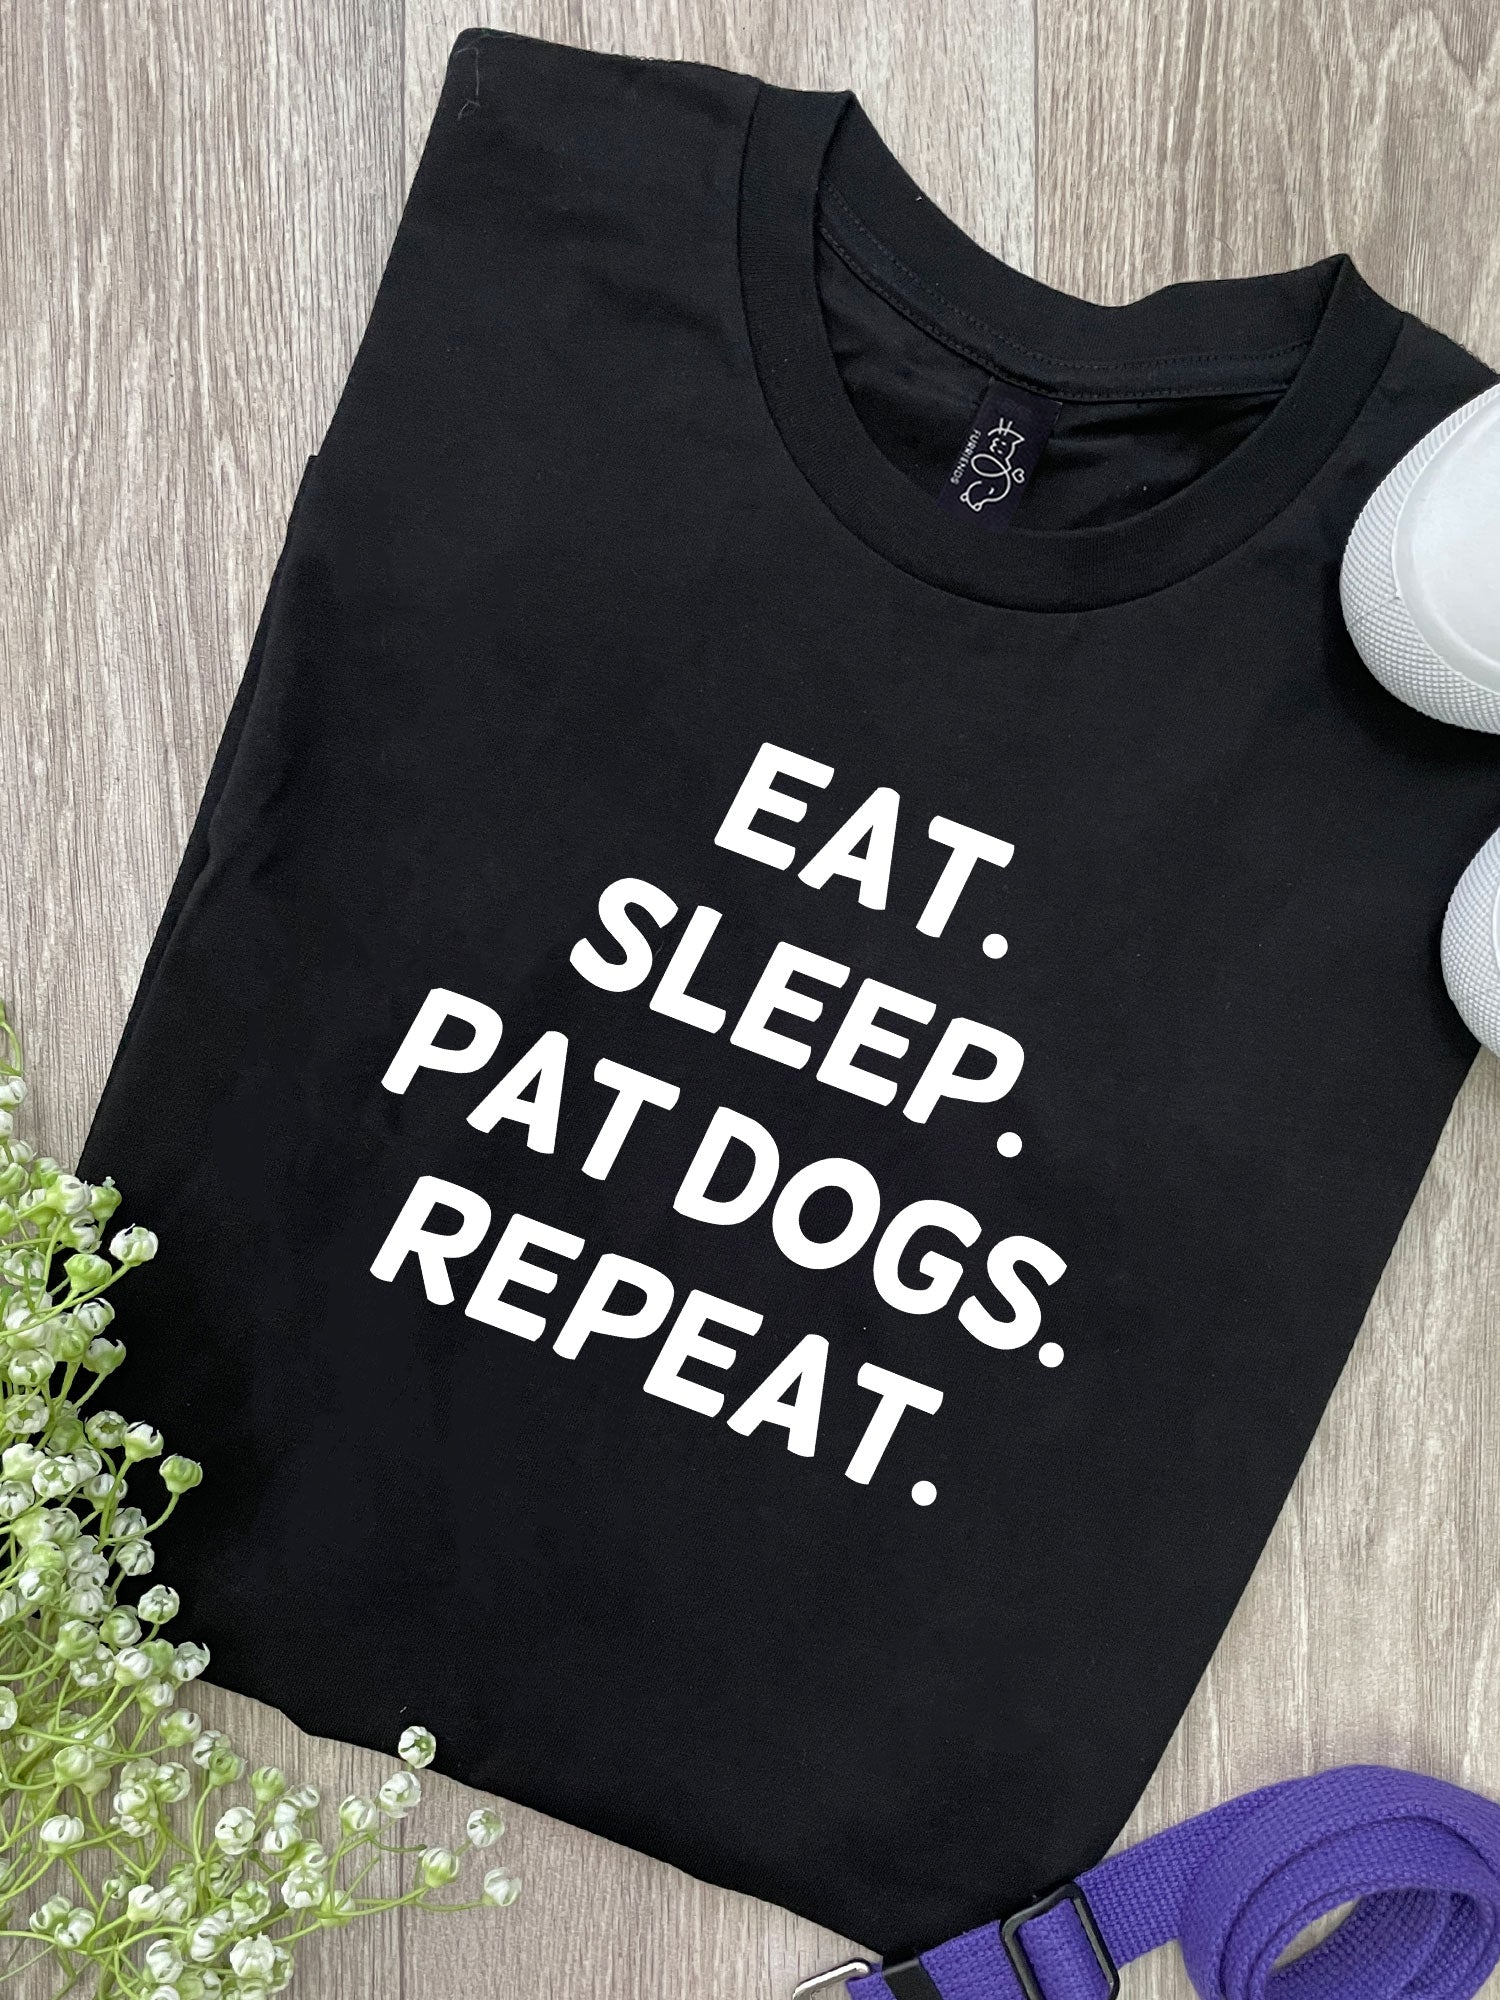 Eat. Sleep. Pat Dogs. Repeat.